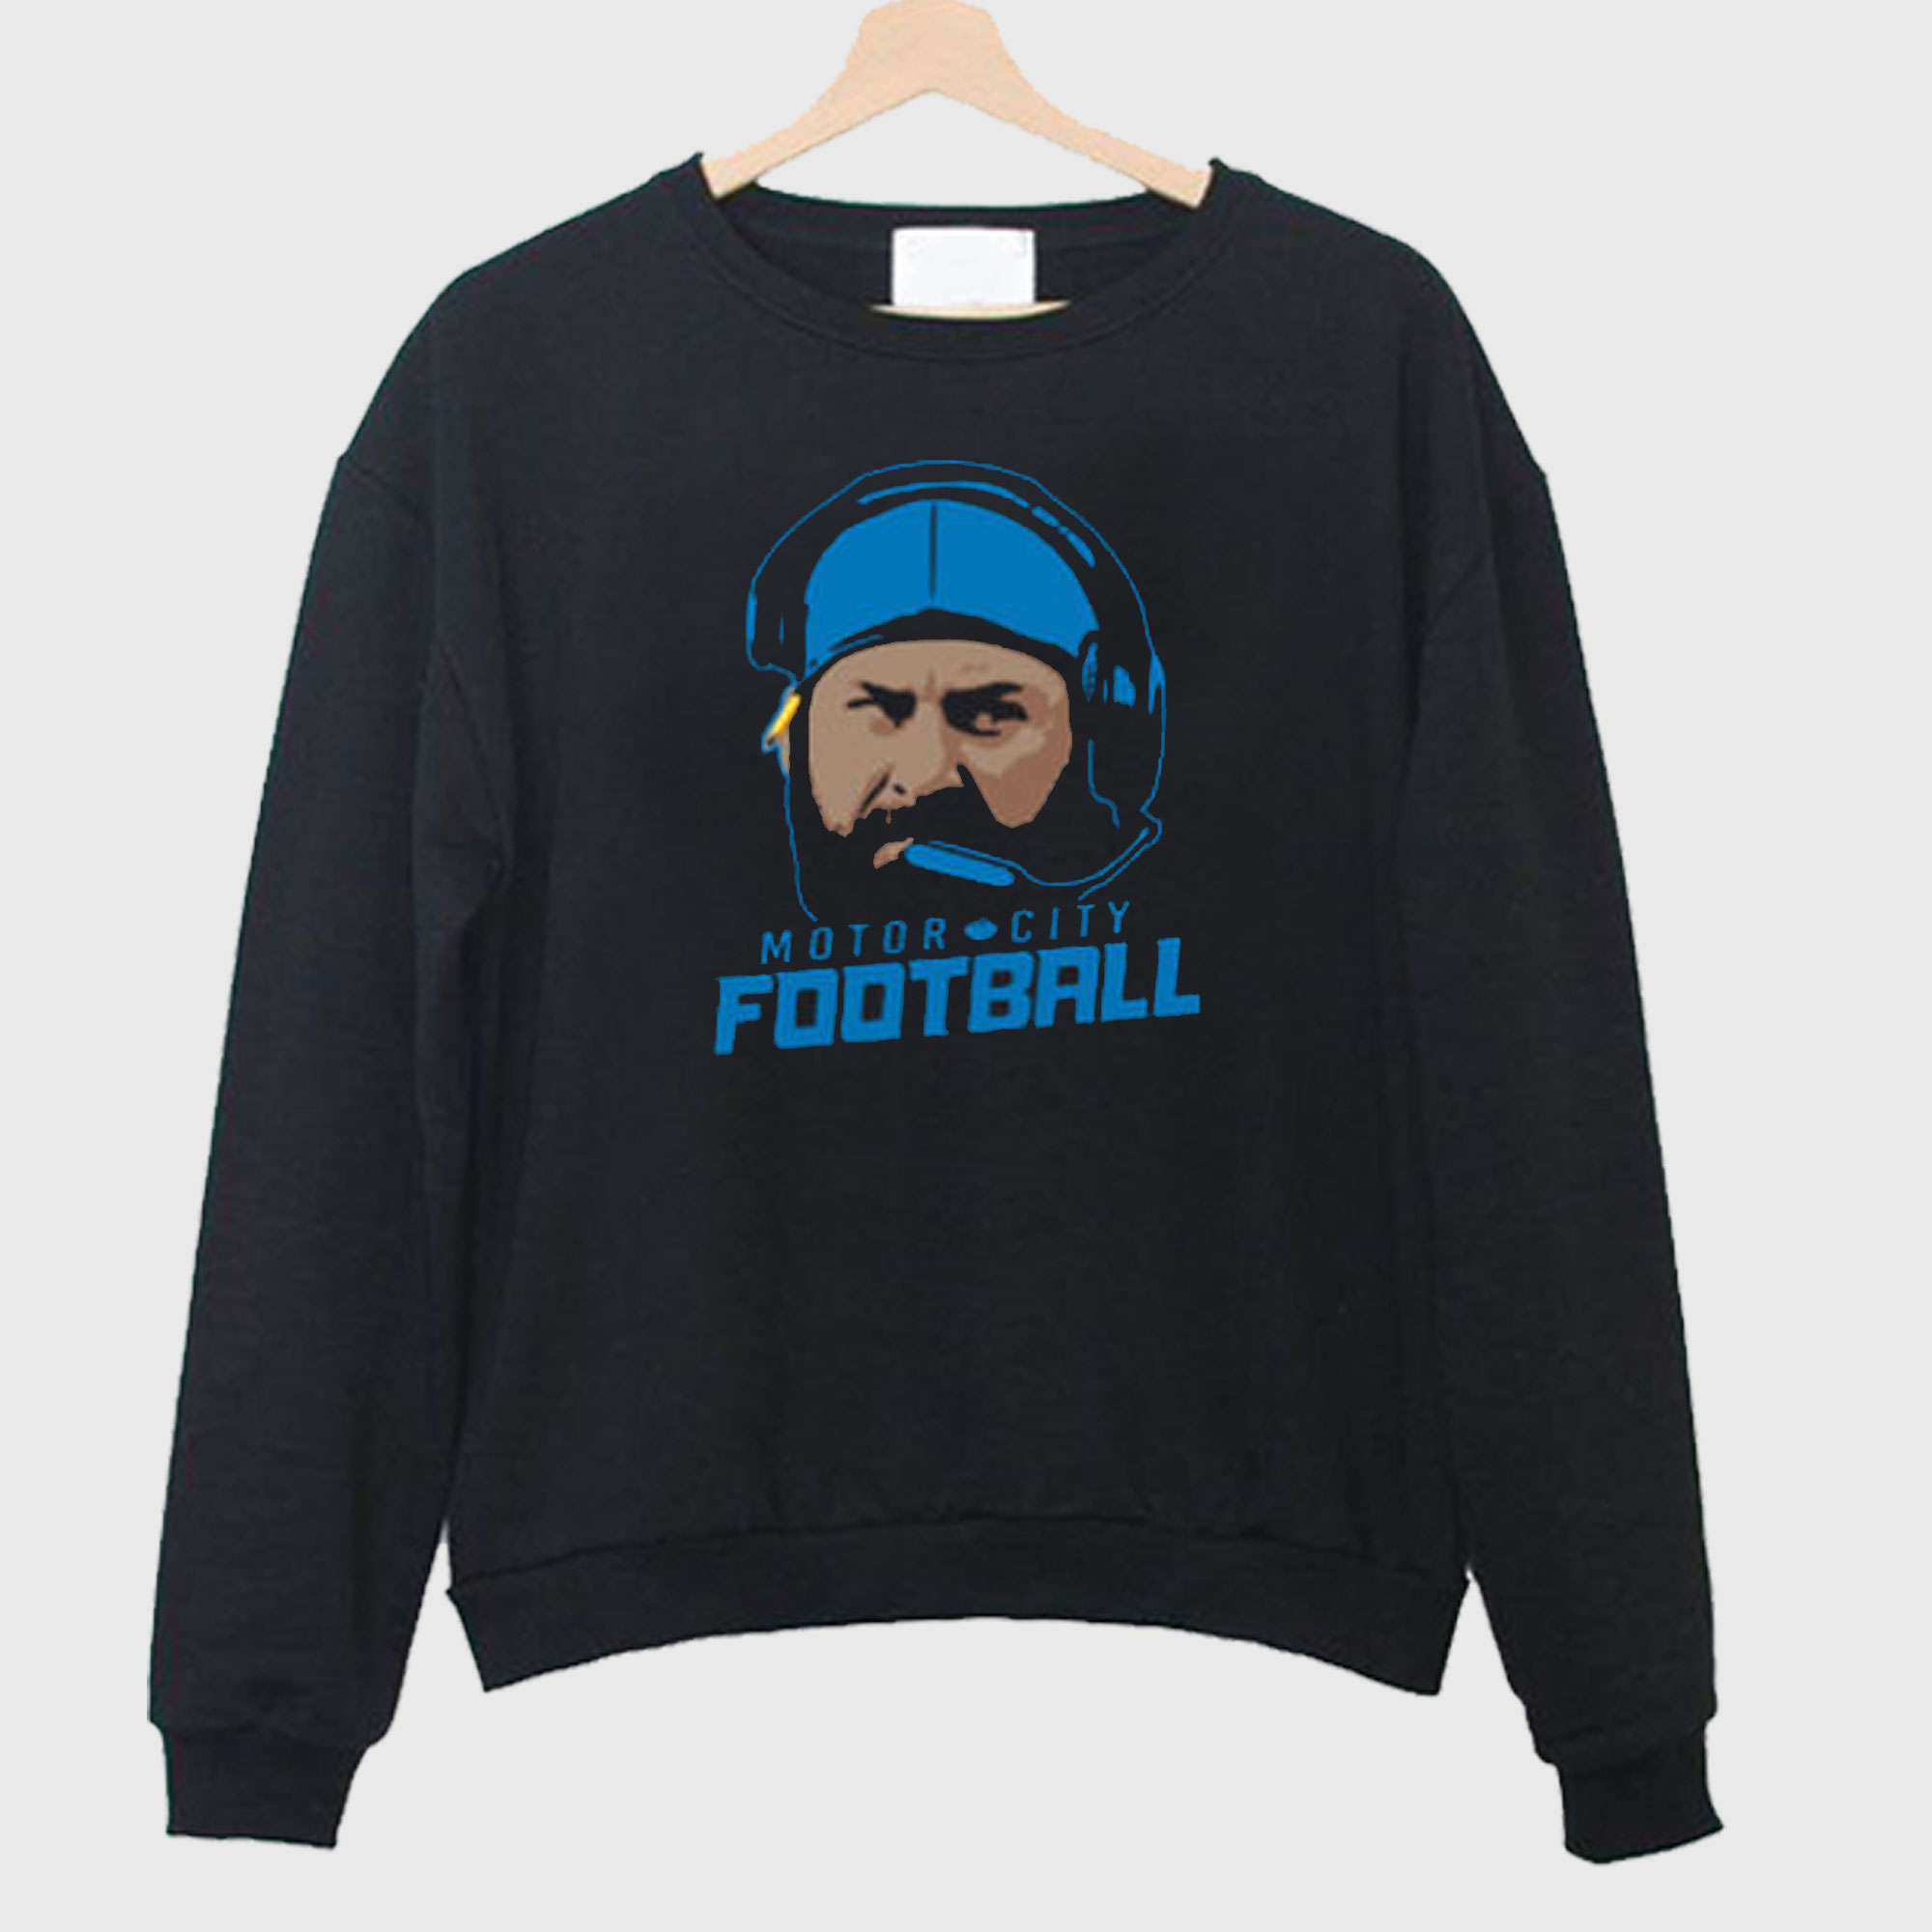 Motor City Football Sweatshirt